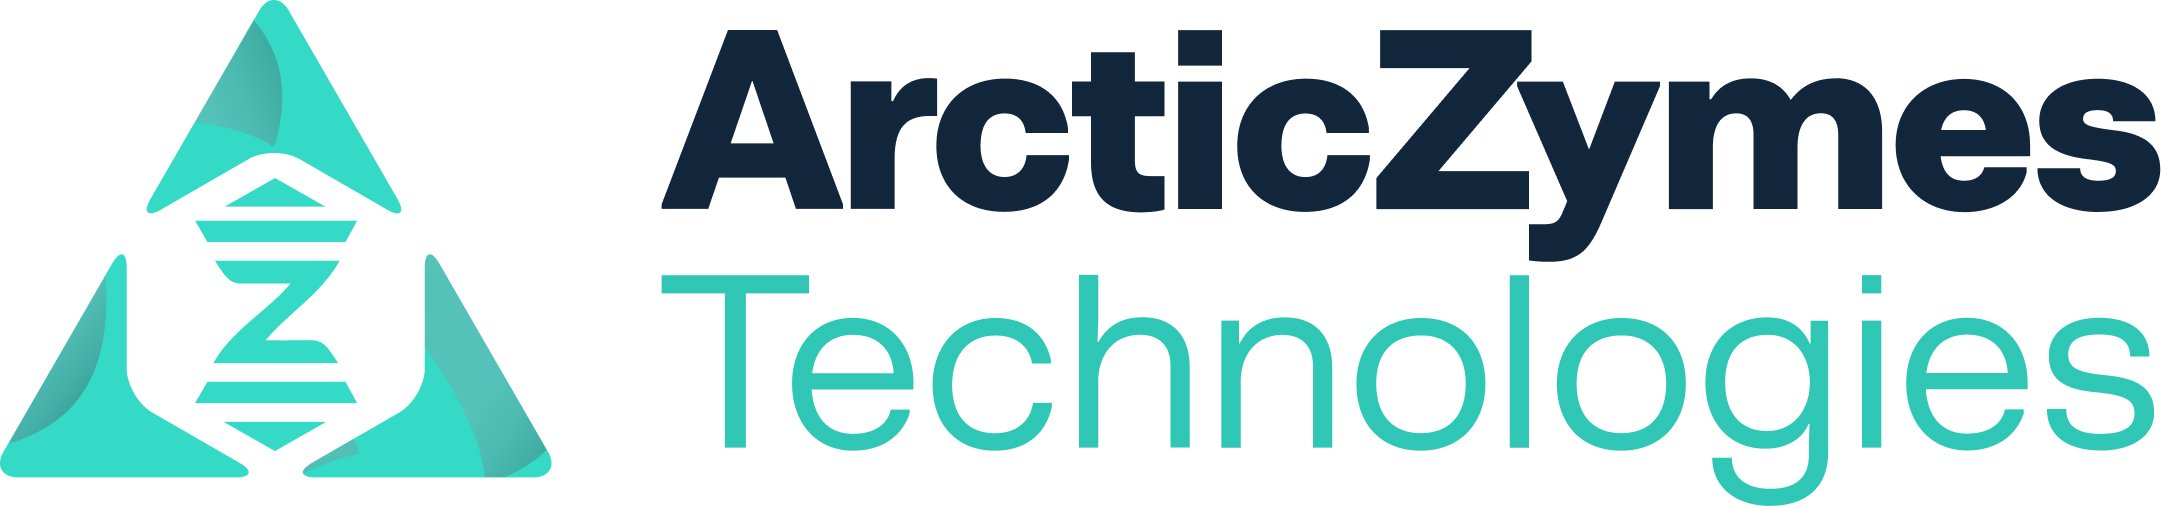 ArticZymes Logo for White bkgd.jpg